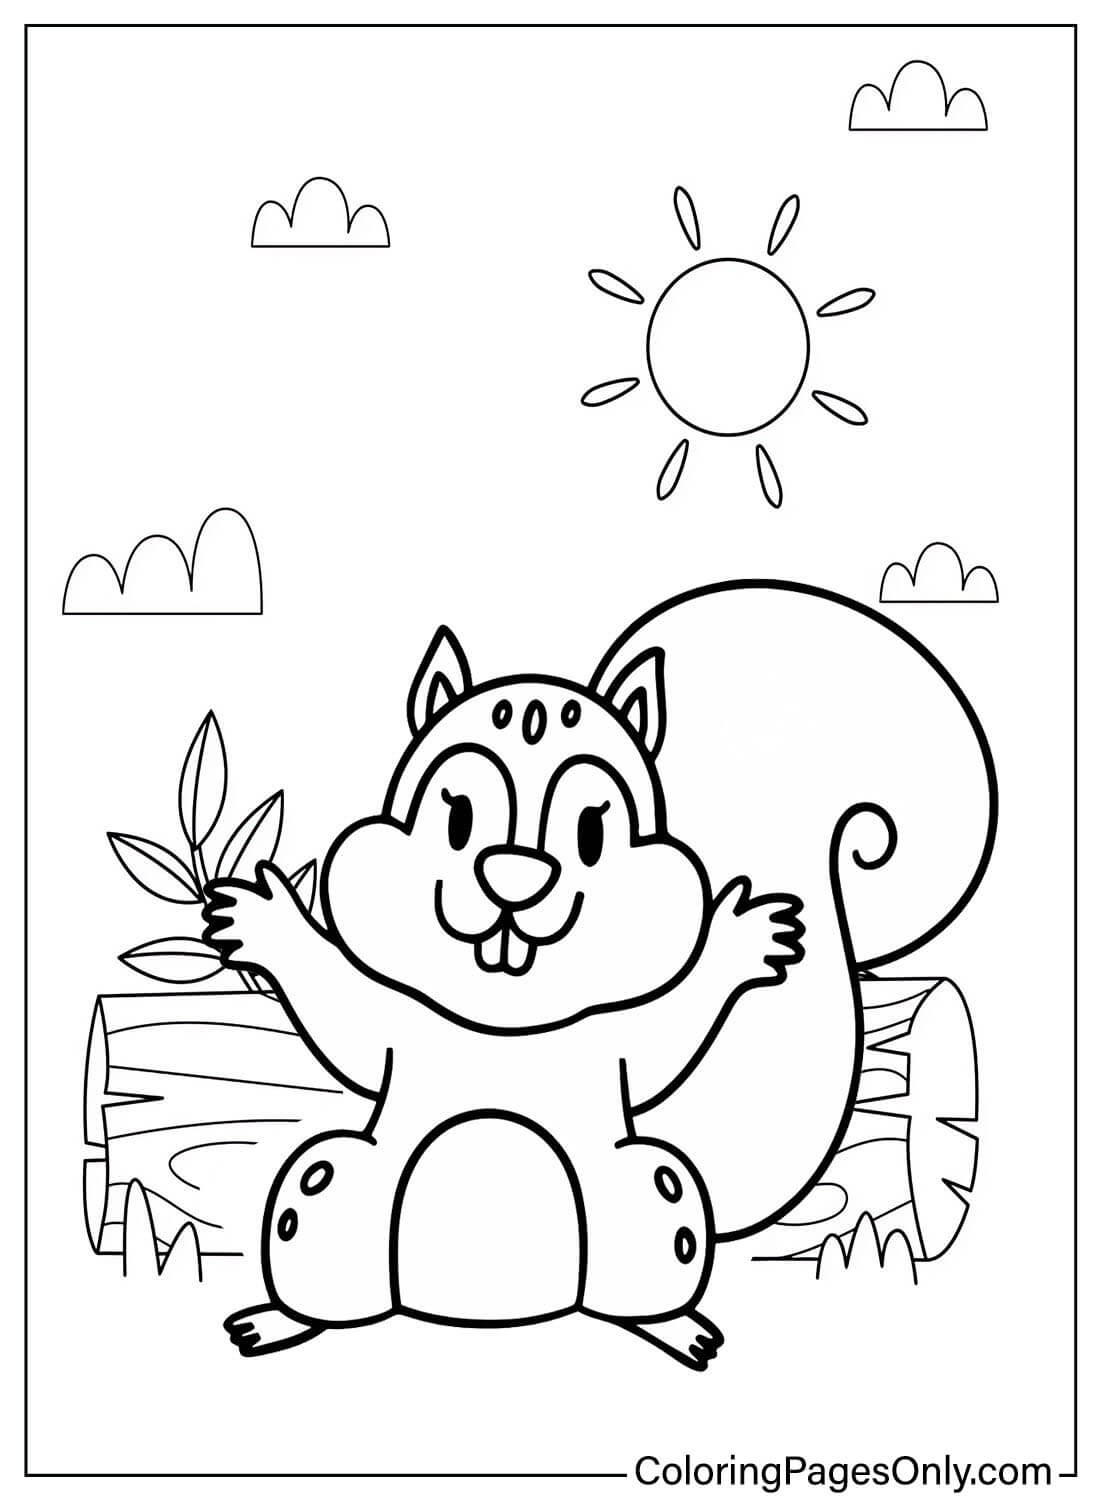 Chipmunk Coloring Page Printable from Chipmunk